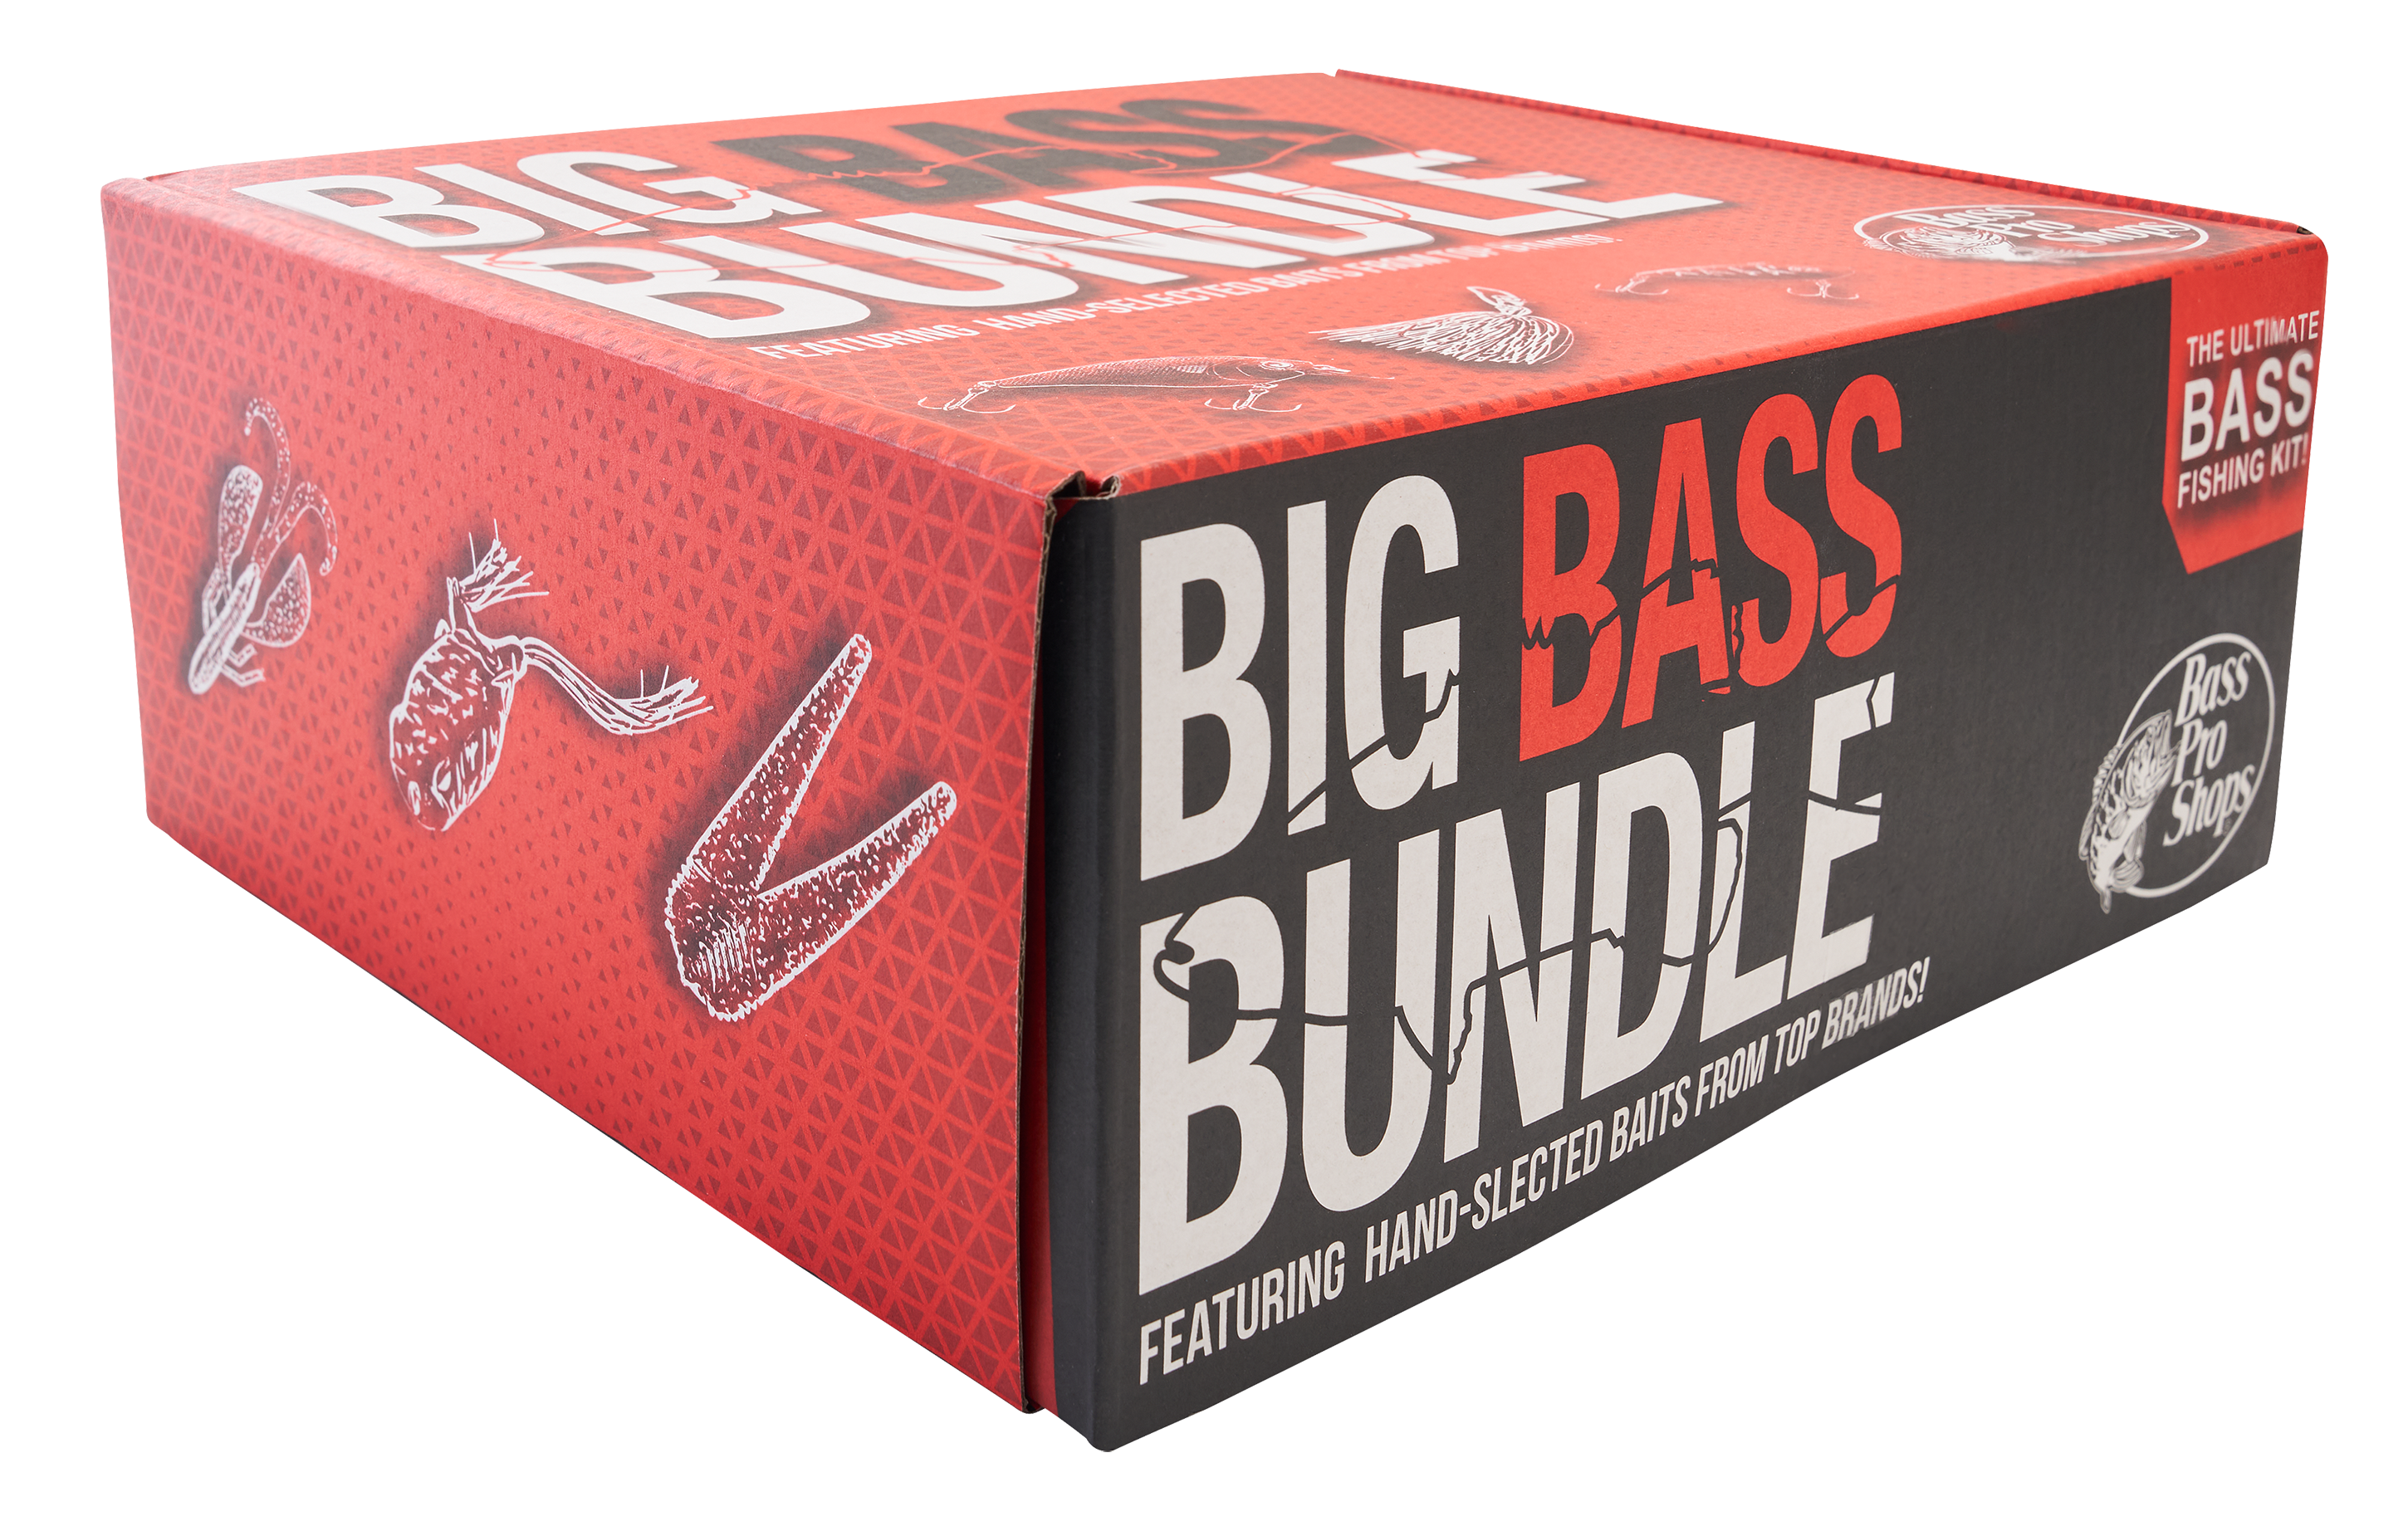 Big Rock Sports 0848-5693 55PC Bass Tackle Kit